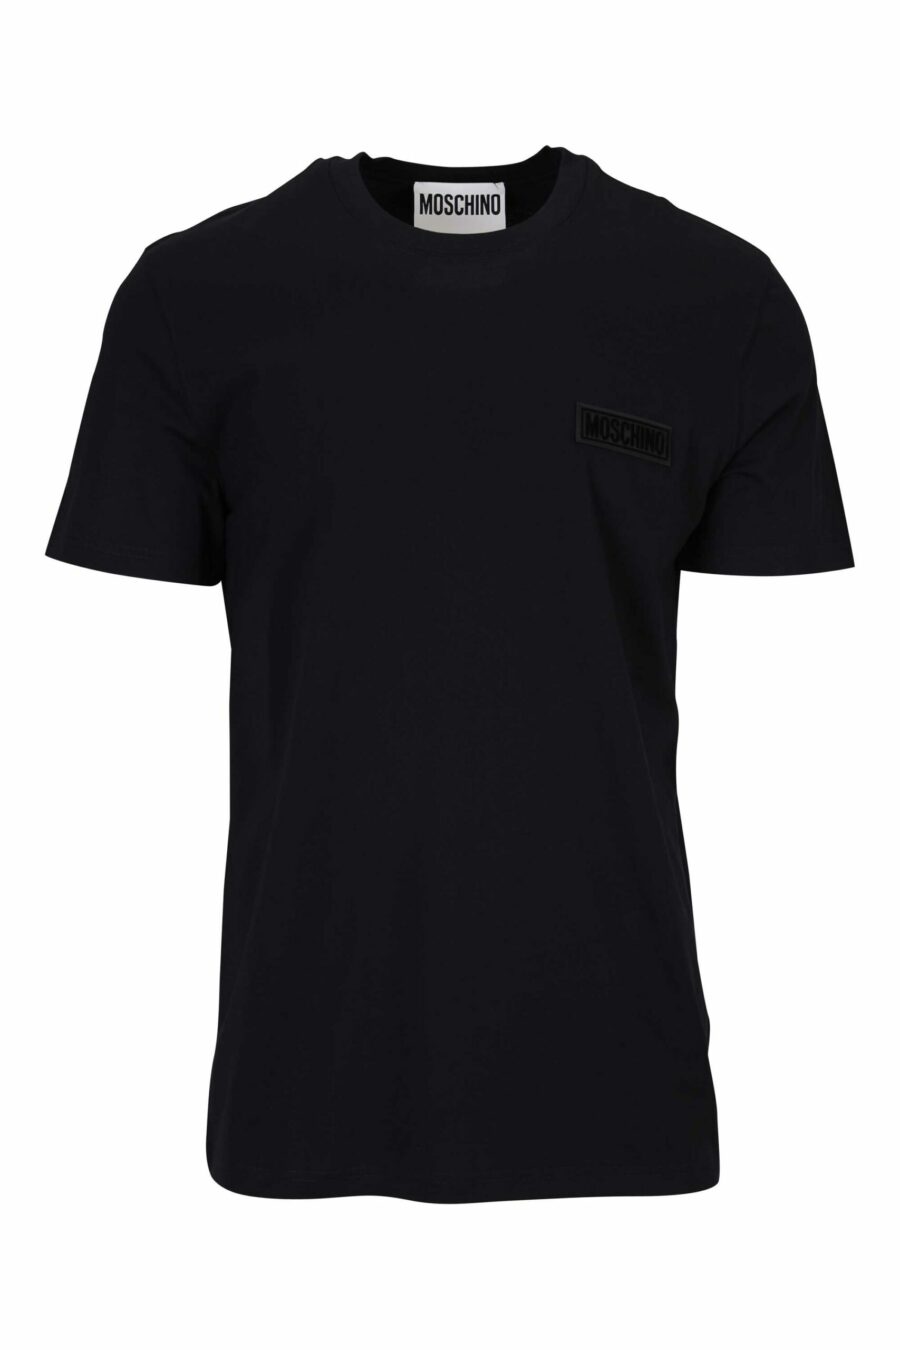 Camiseta negra con minilogo etiqueta blanca - 667113394862 scaled